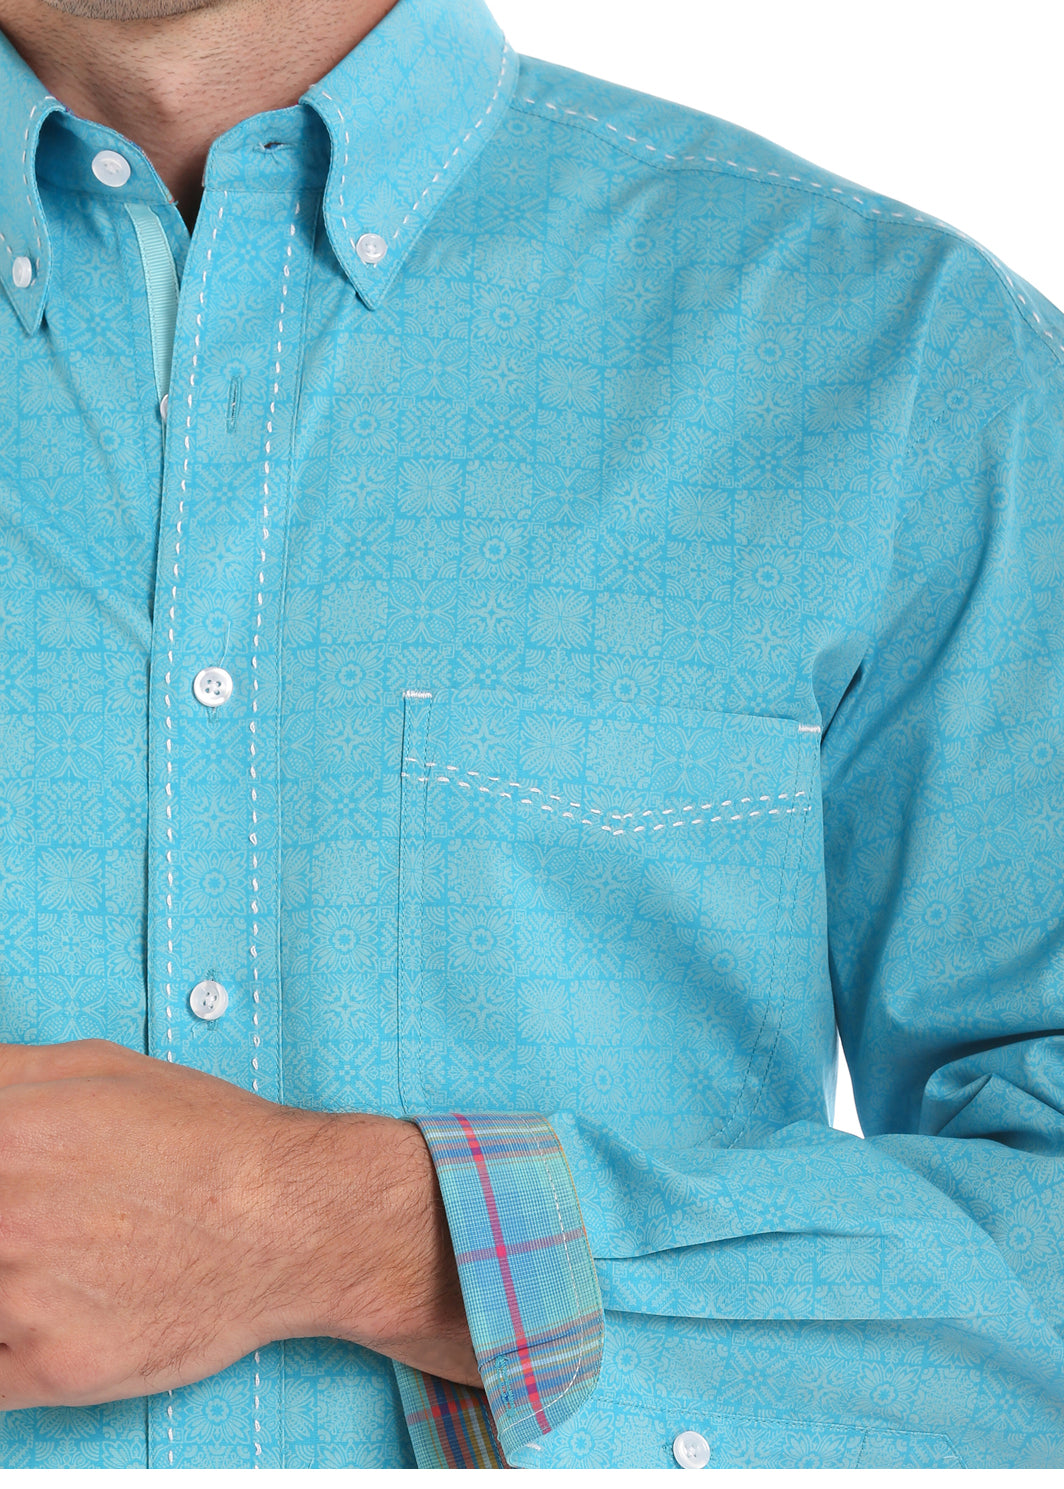 Rough Stock Men's Turquoise Print Shirt #R0G5003